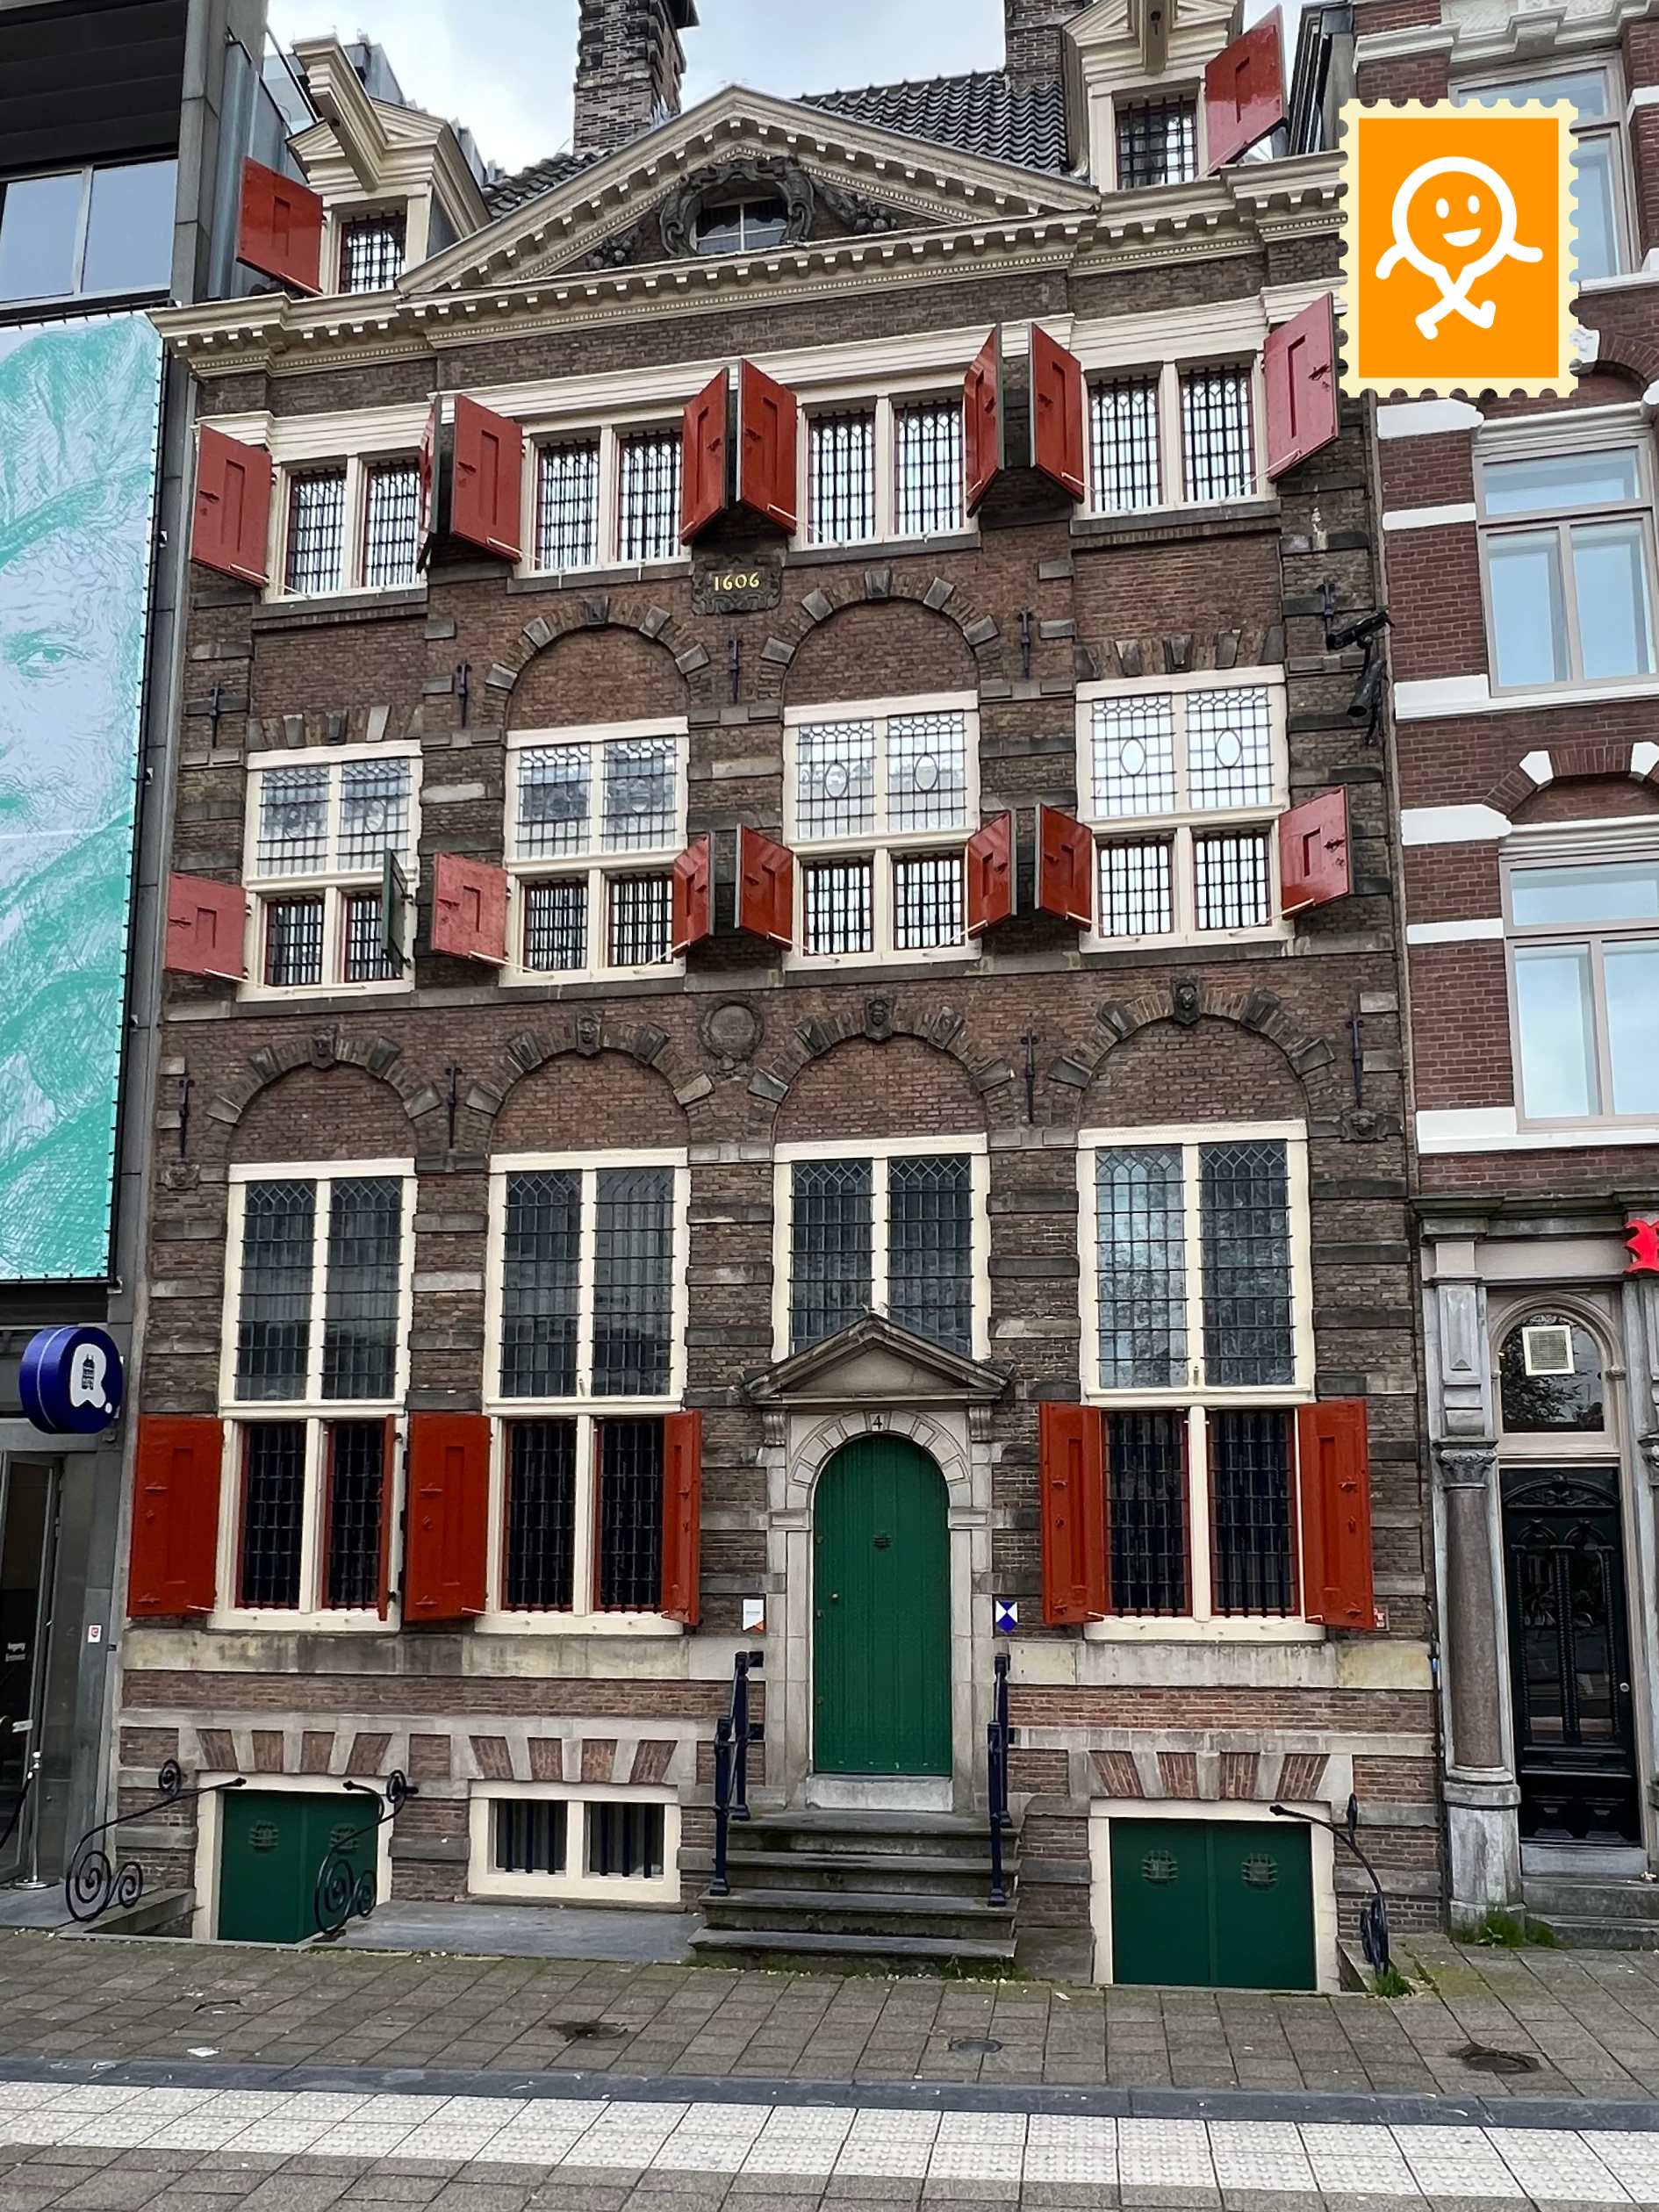 1. Rembrandthuis